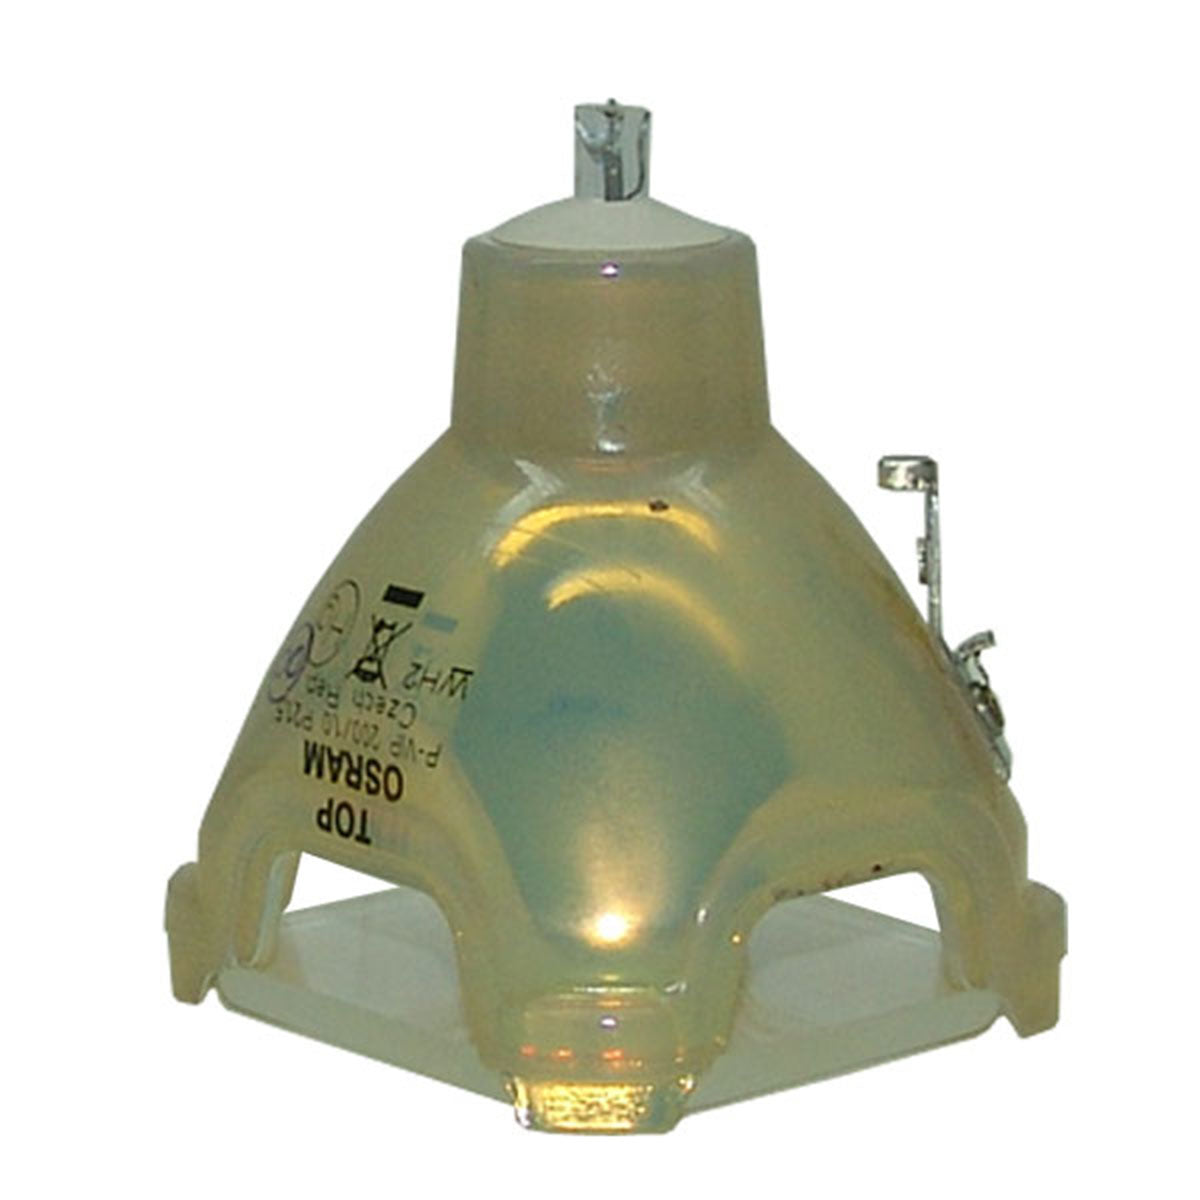 Sincere TT3T 707-2 Osram Projector Bare Lamp